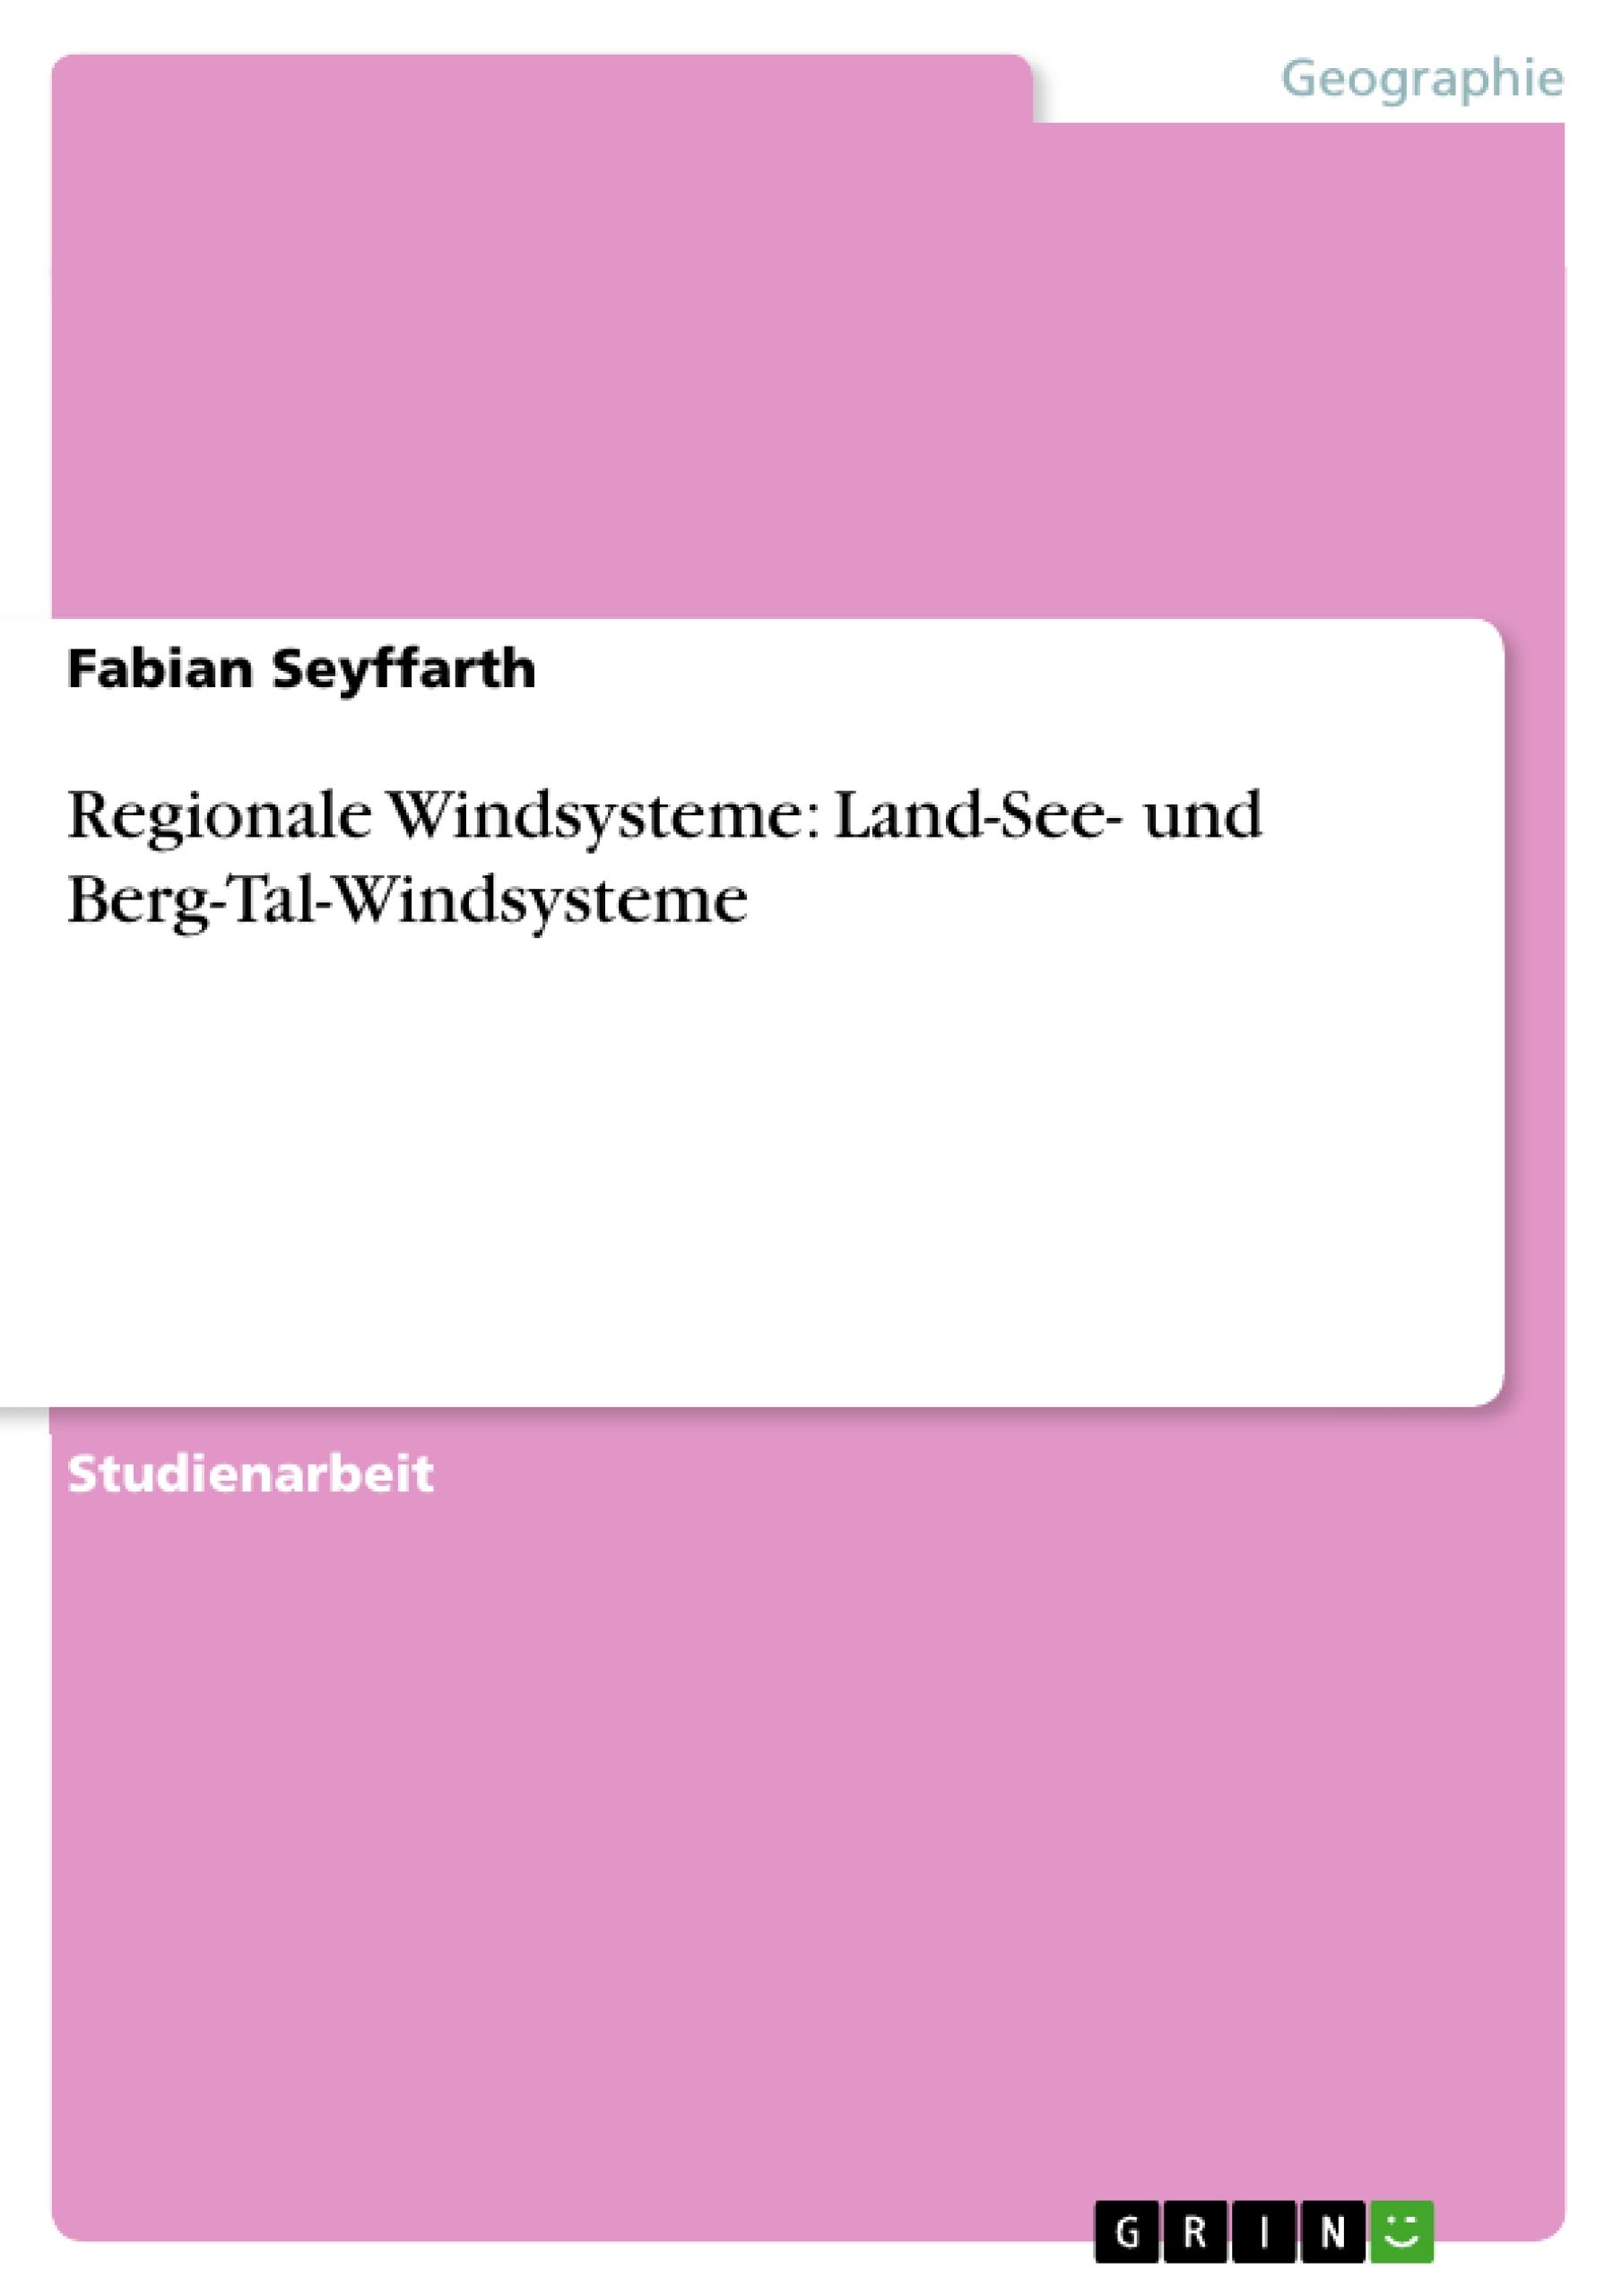 Regionale Windsysteme: Land-See- und Berg-Tal-Windsysteme - Seyffarth, Fabian